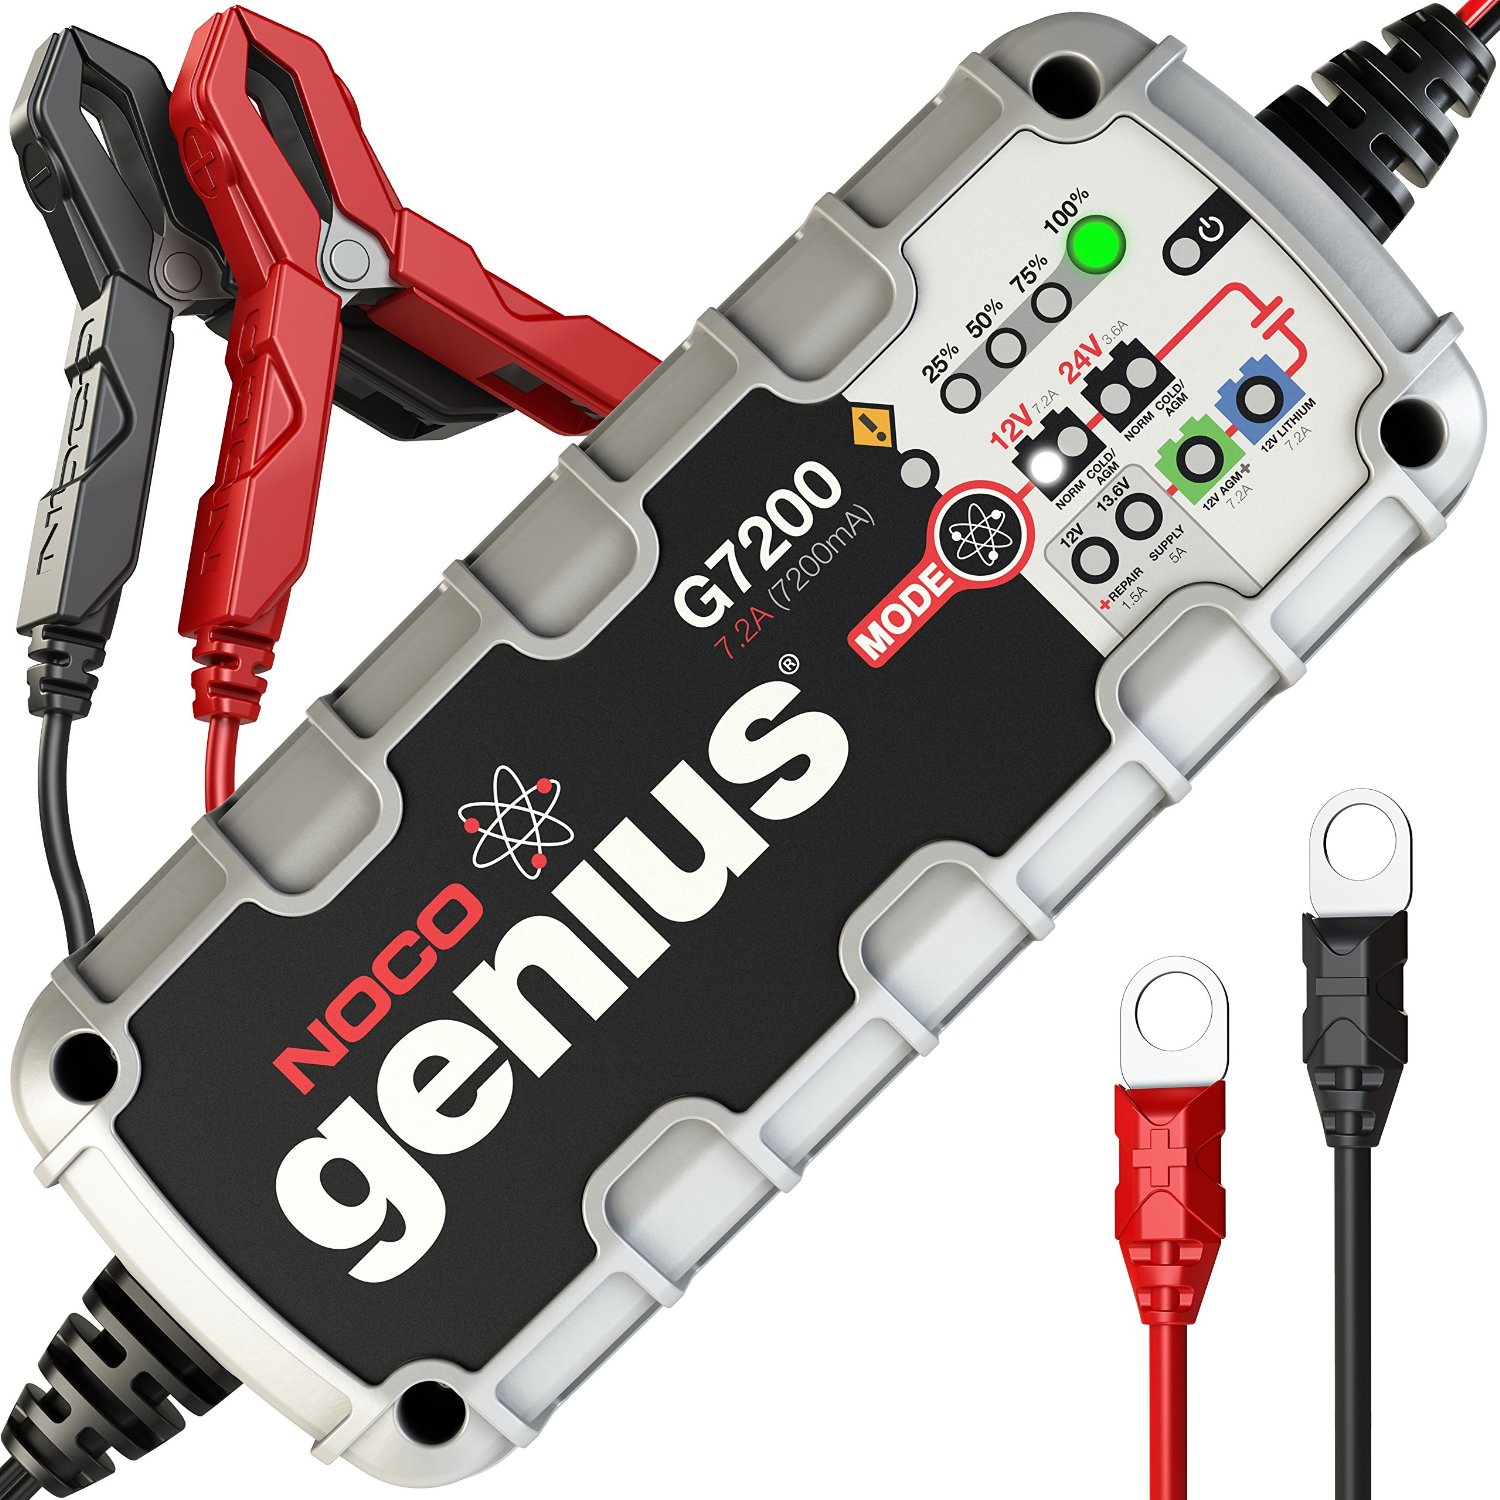 NOCO Genius G7200 Multi-Purpose Battery Charger, NOCO G7200